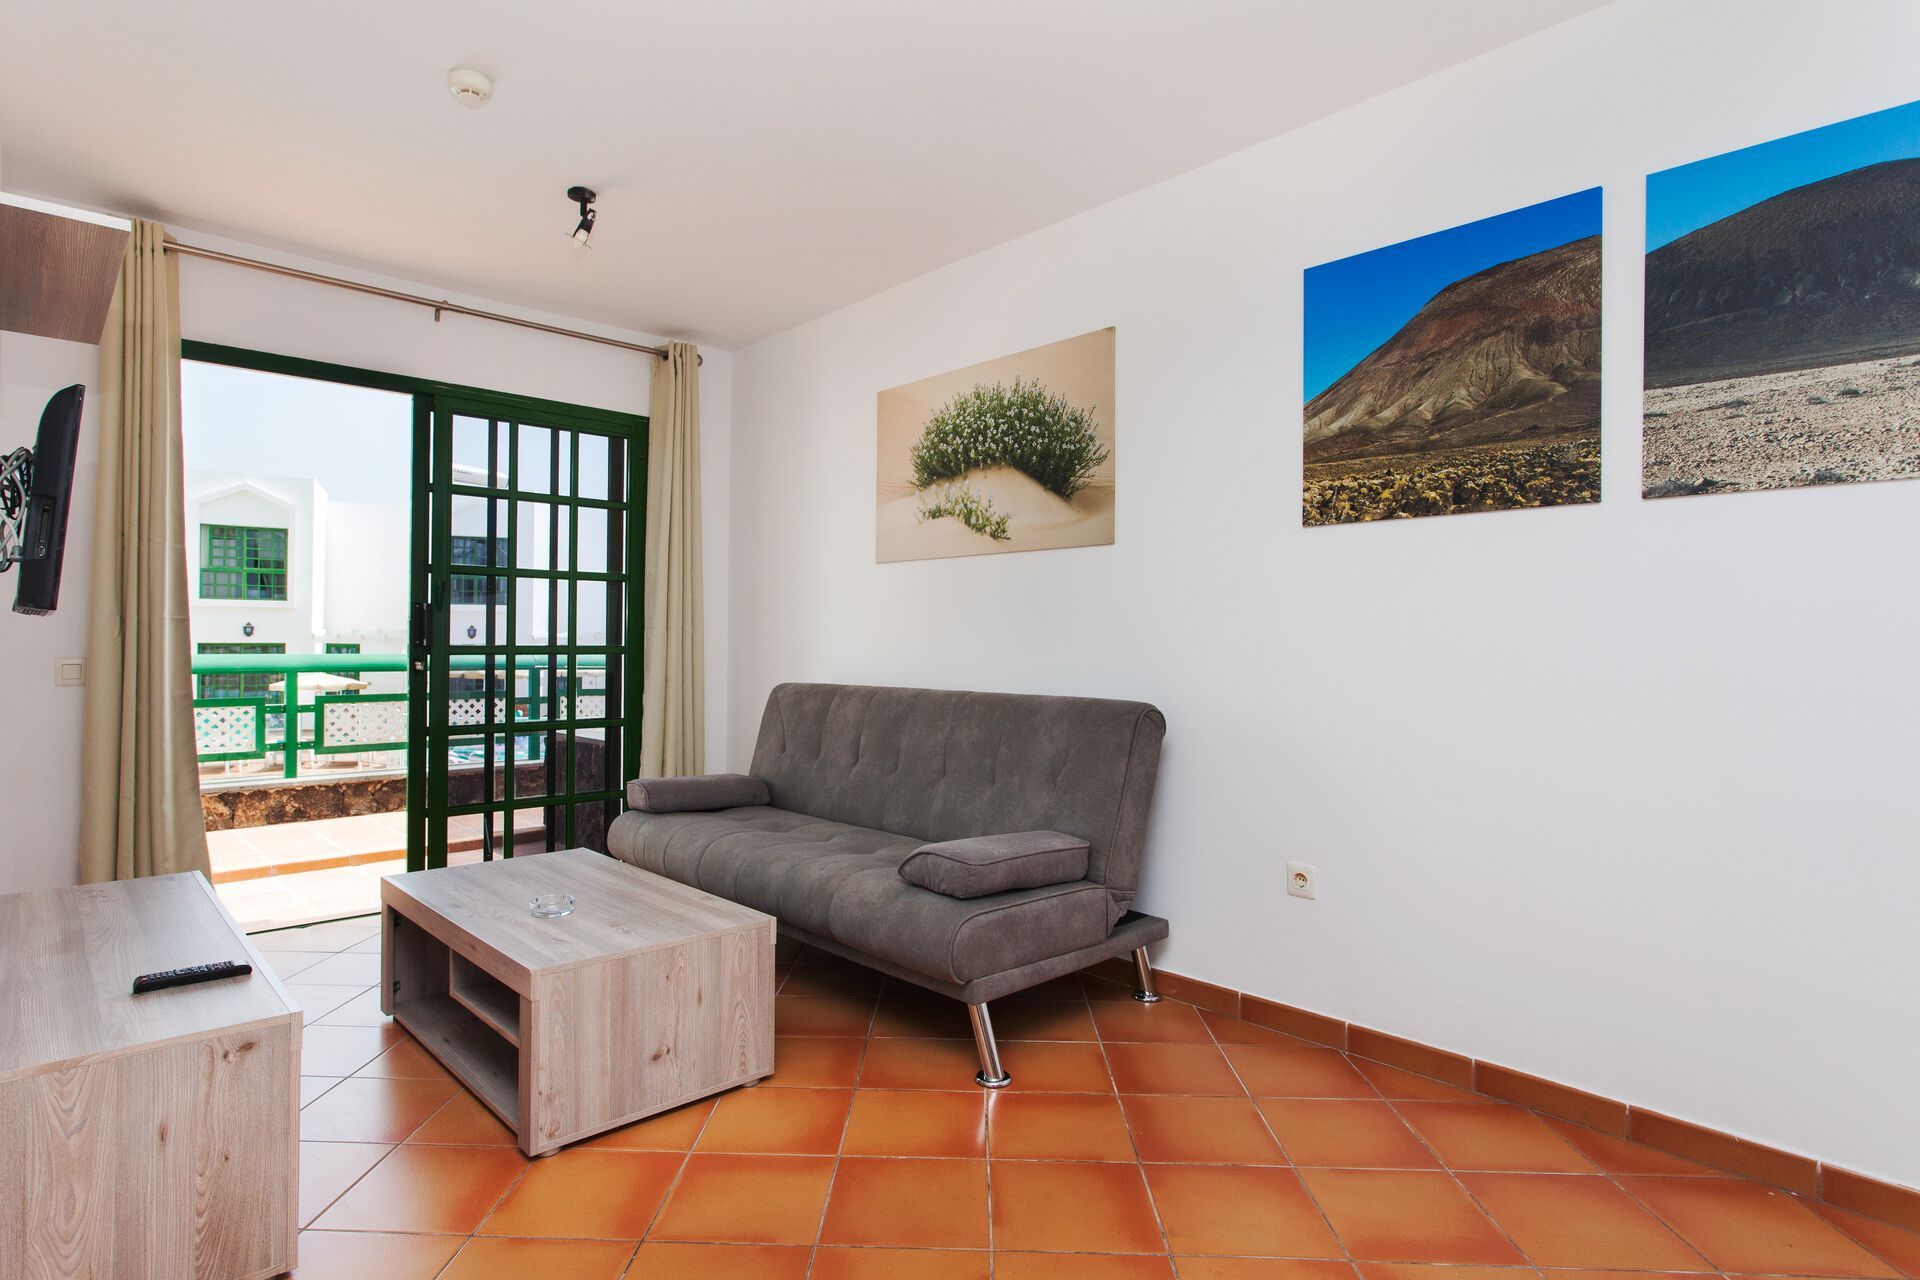 Canaries - Fuerteventura - Espagne - Hotel Tao Caleta Playa 2*